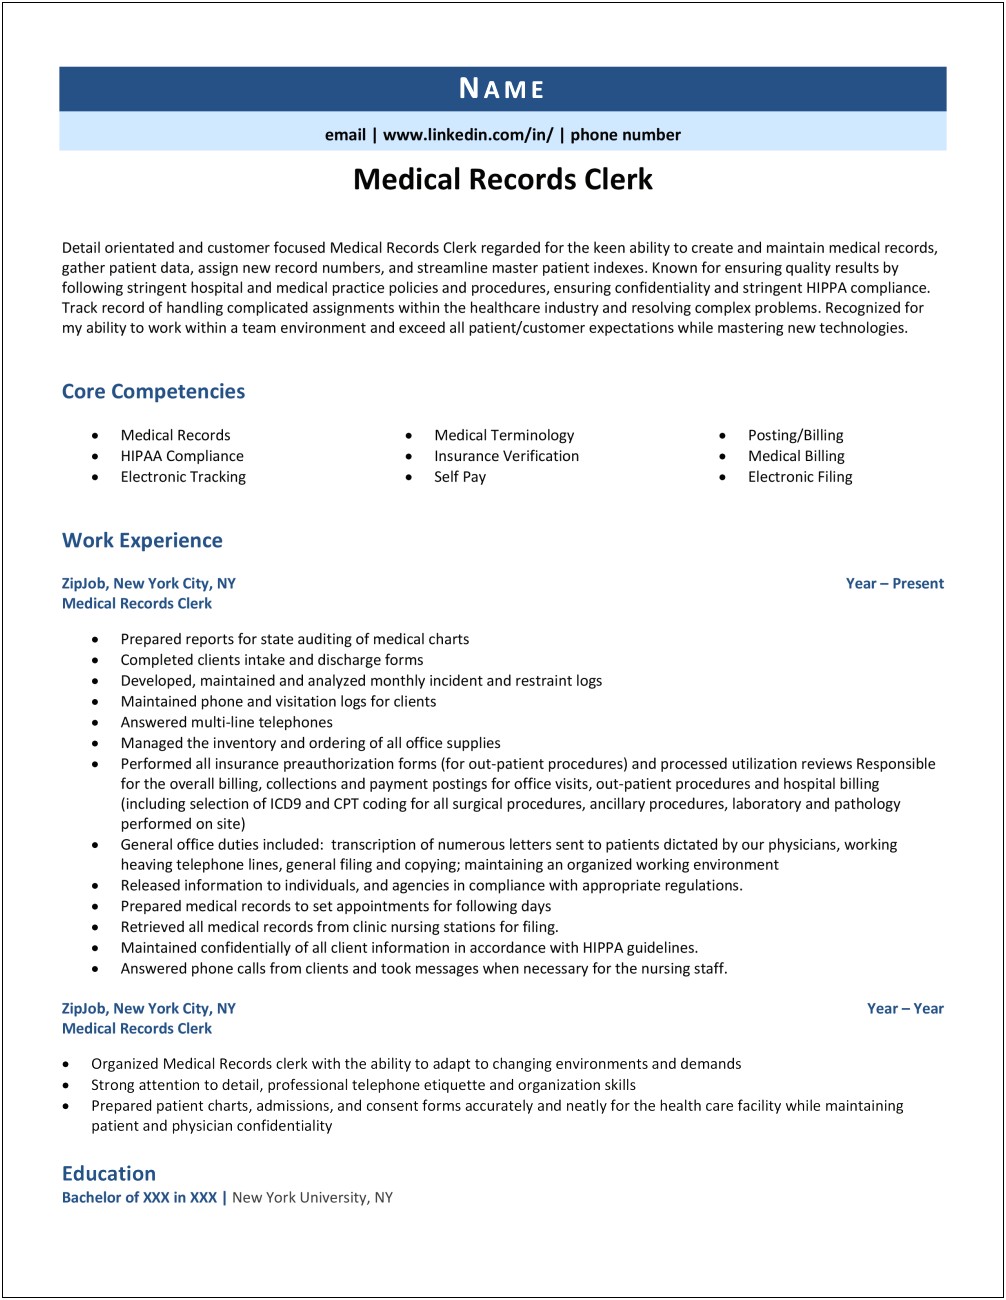 Medical Records Clerk Resume Objective